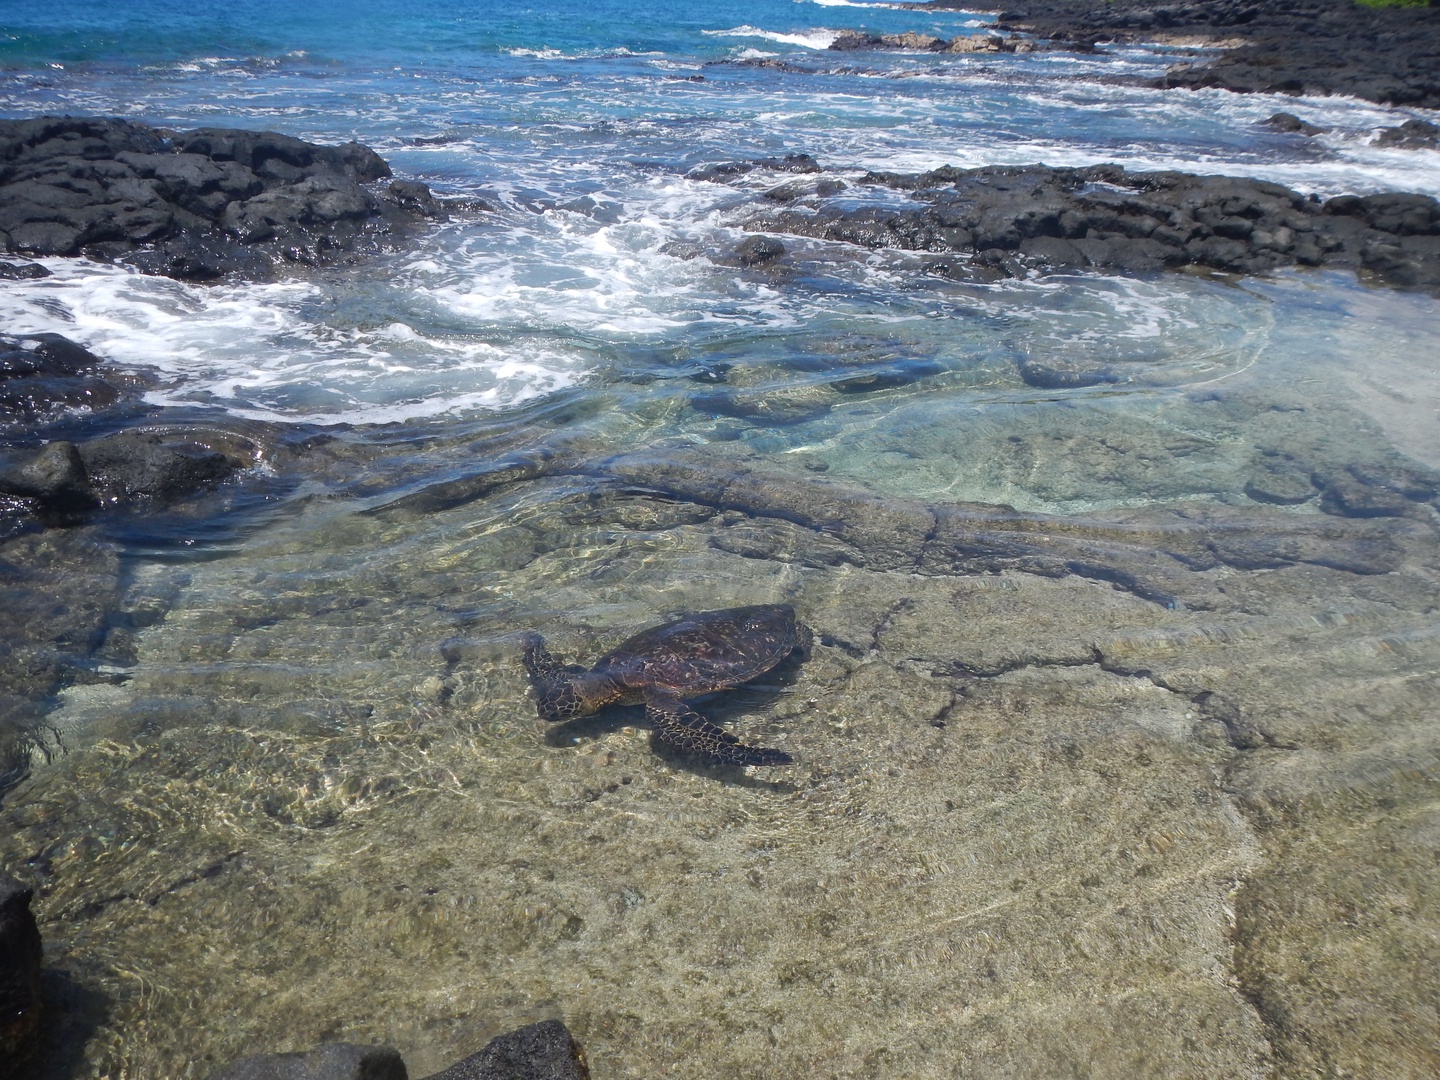 Kailua Kona Vacation Rentals, Hoku'Ea Hale - Photo of the resident turtle from the properties edge